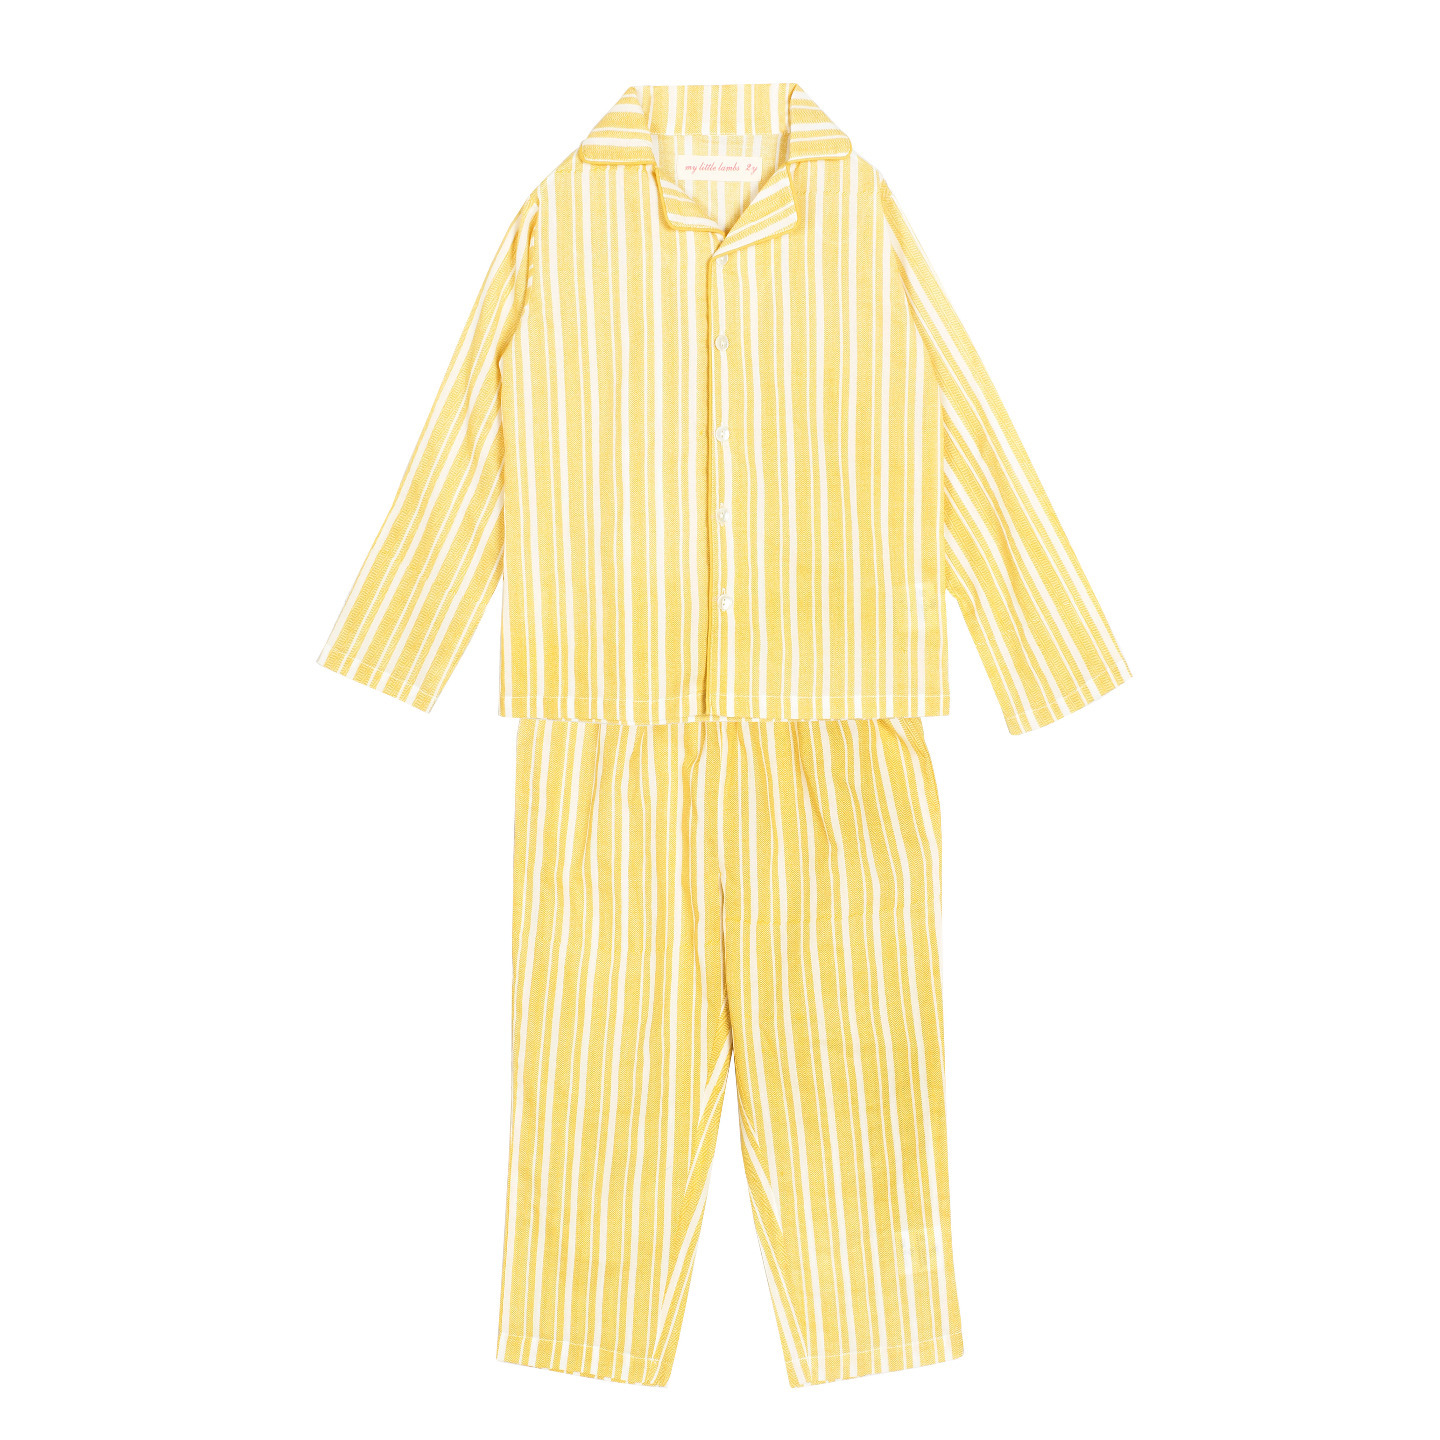 Zig Zag Stripe Yellow Night Suit